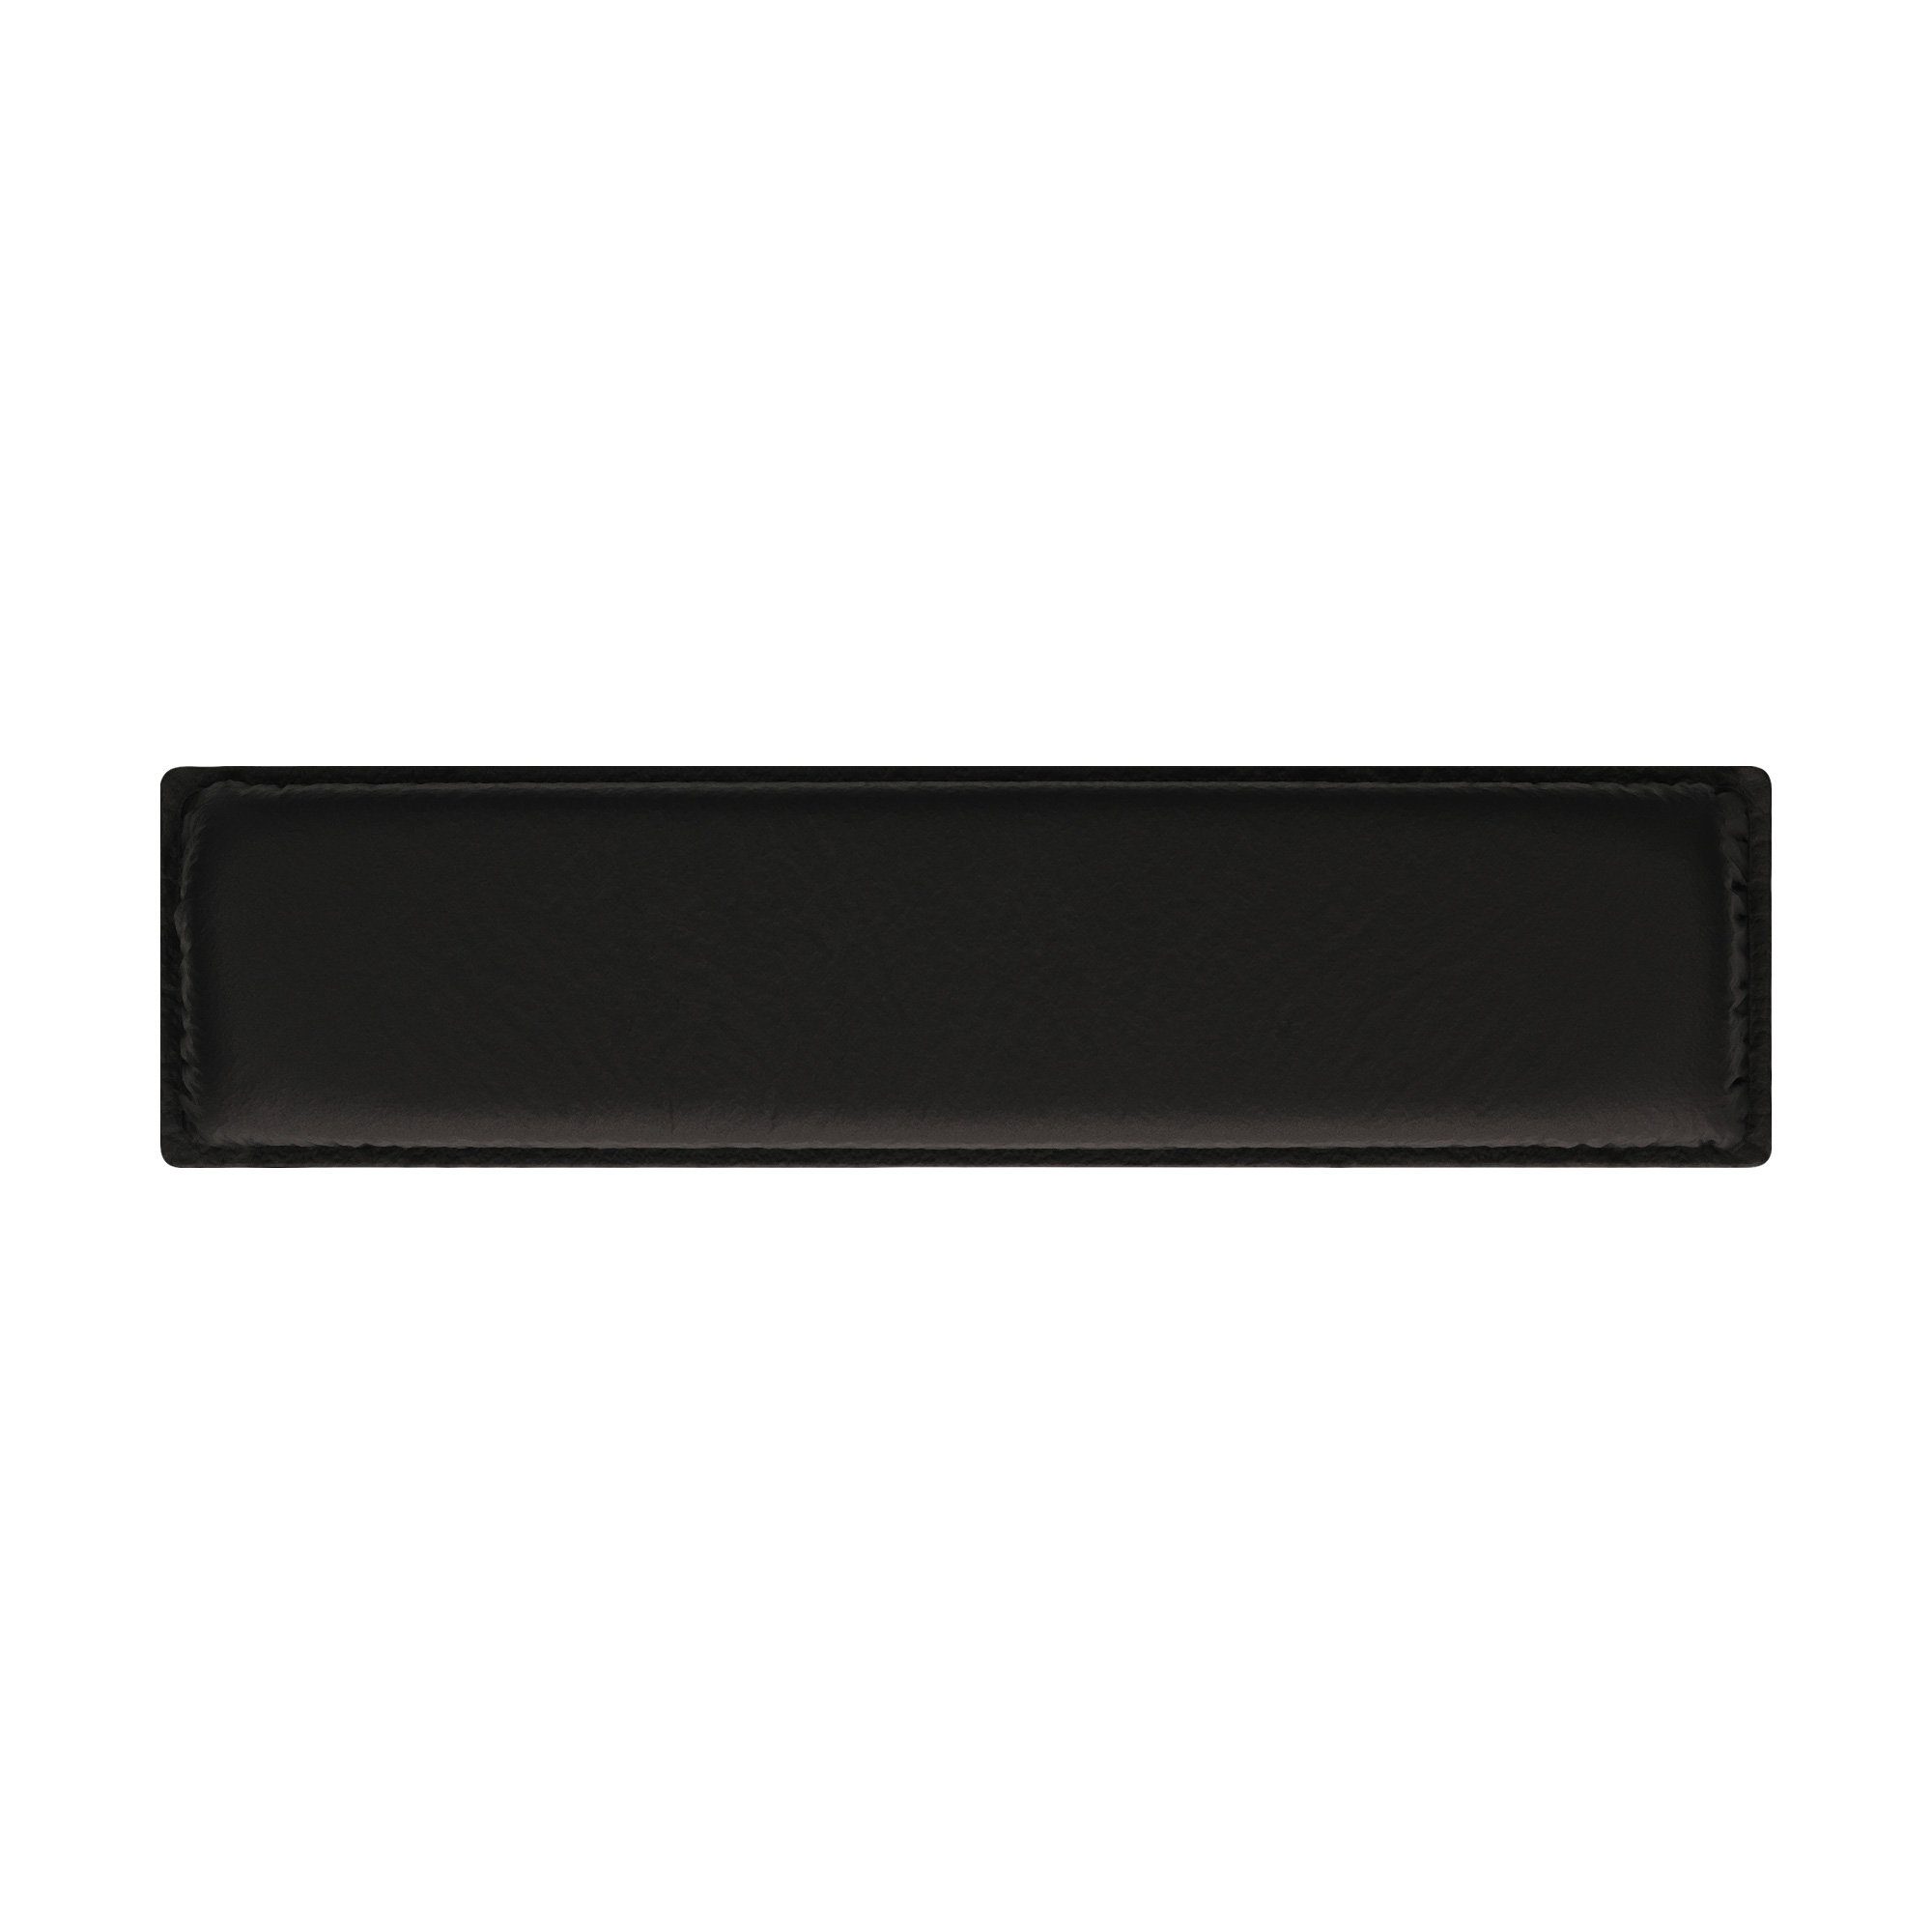 kwmobile Bügelpolster Bügelpolster für Sennheiser HD200 Pro, Kunstleder Kopfbügel Polster für Overear Headphones